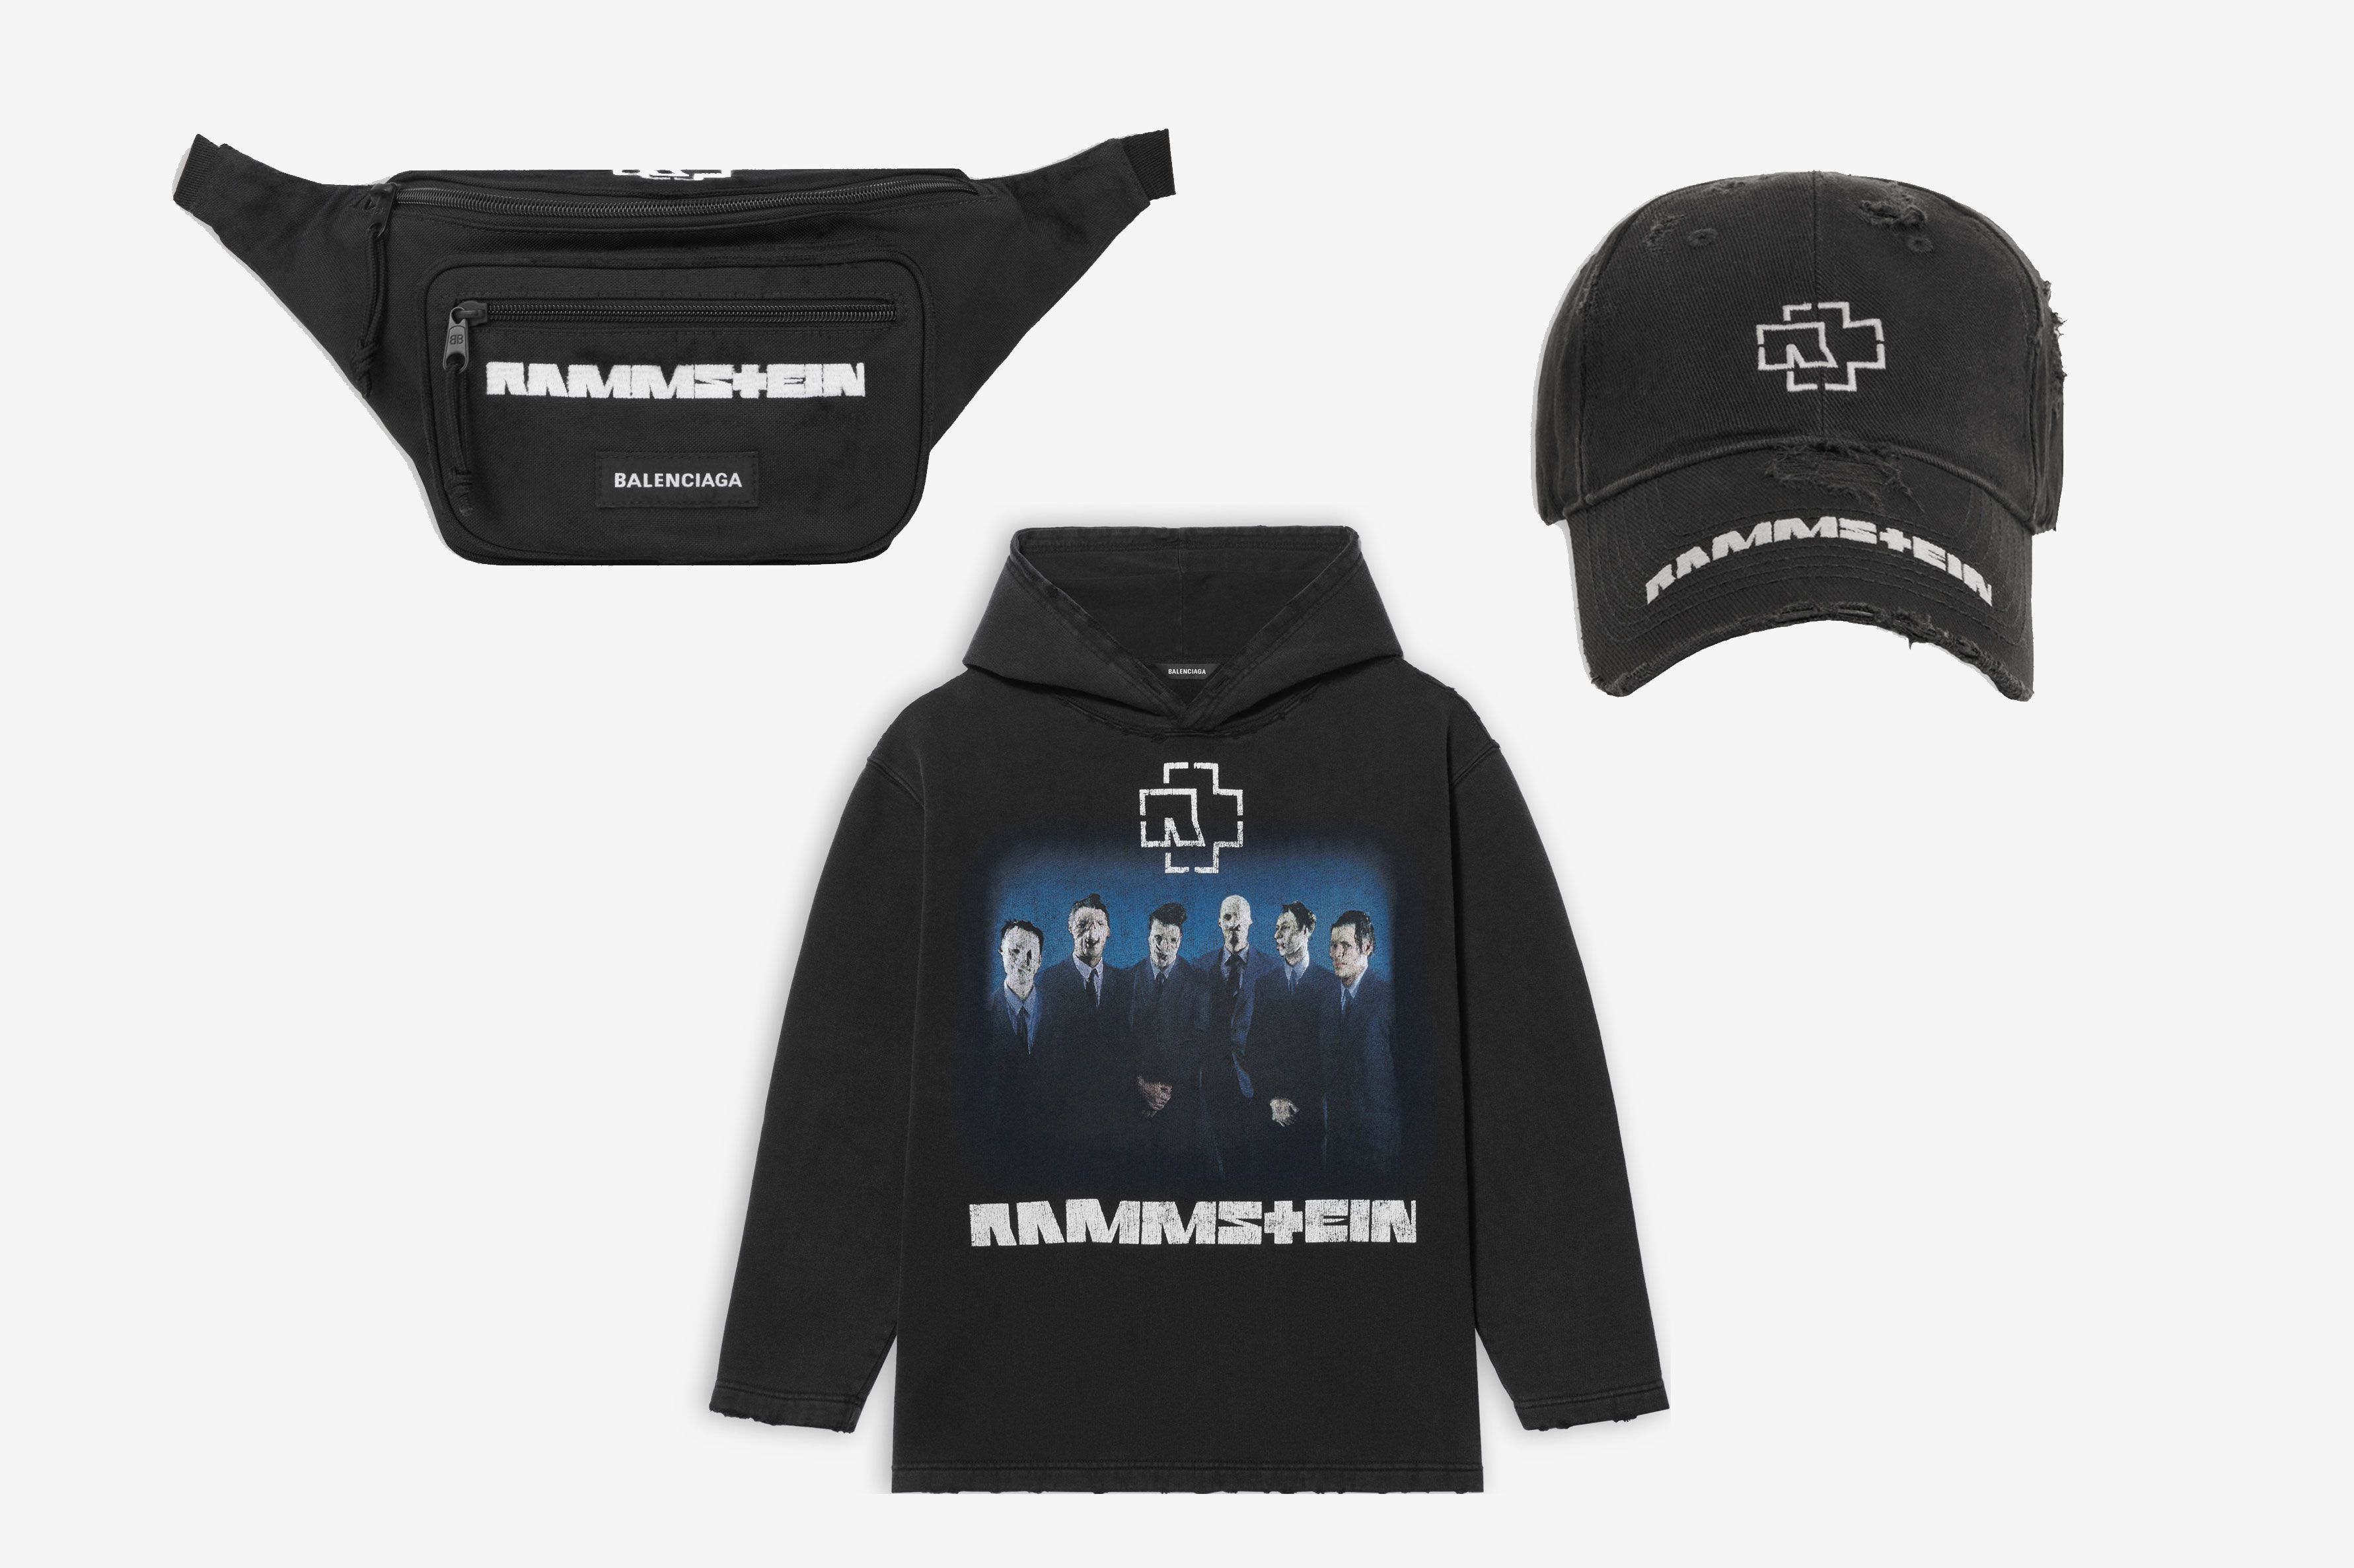 Rammstein Partner With Balenciaga For Overpriced Merch Collection